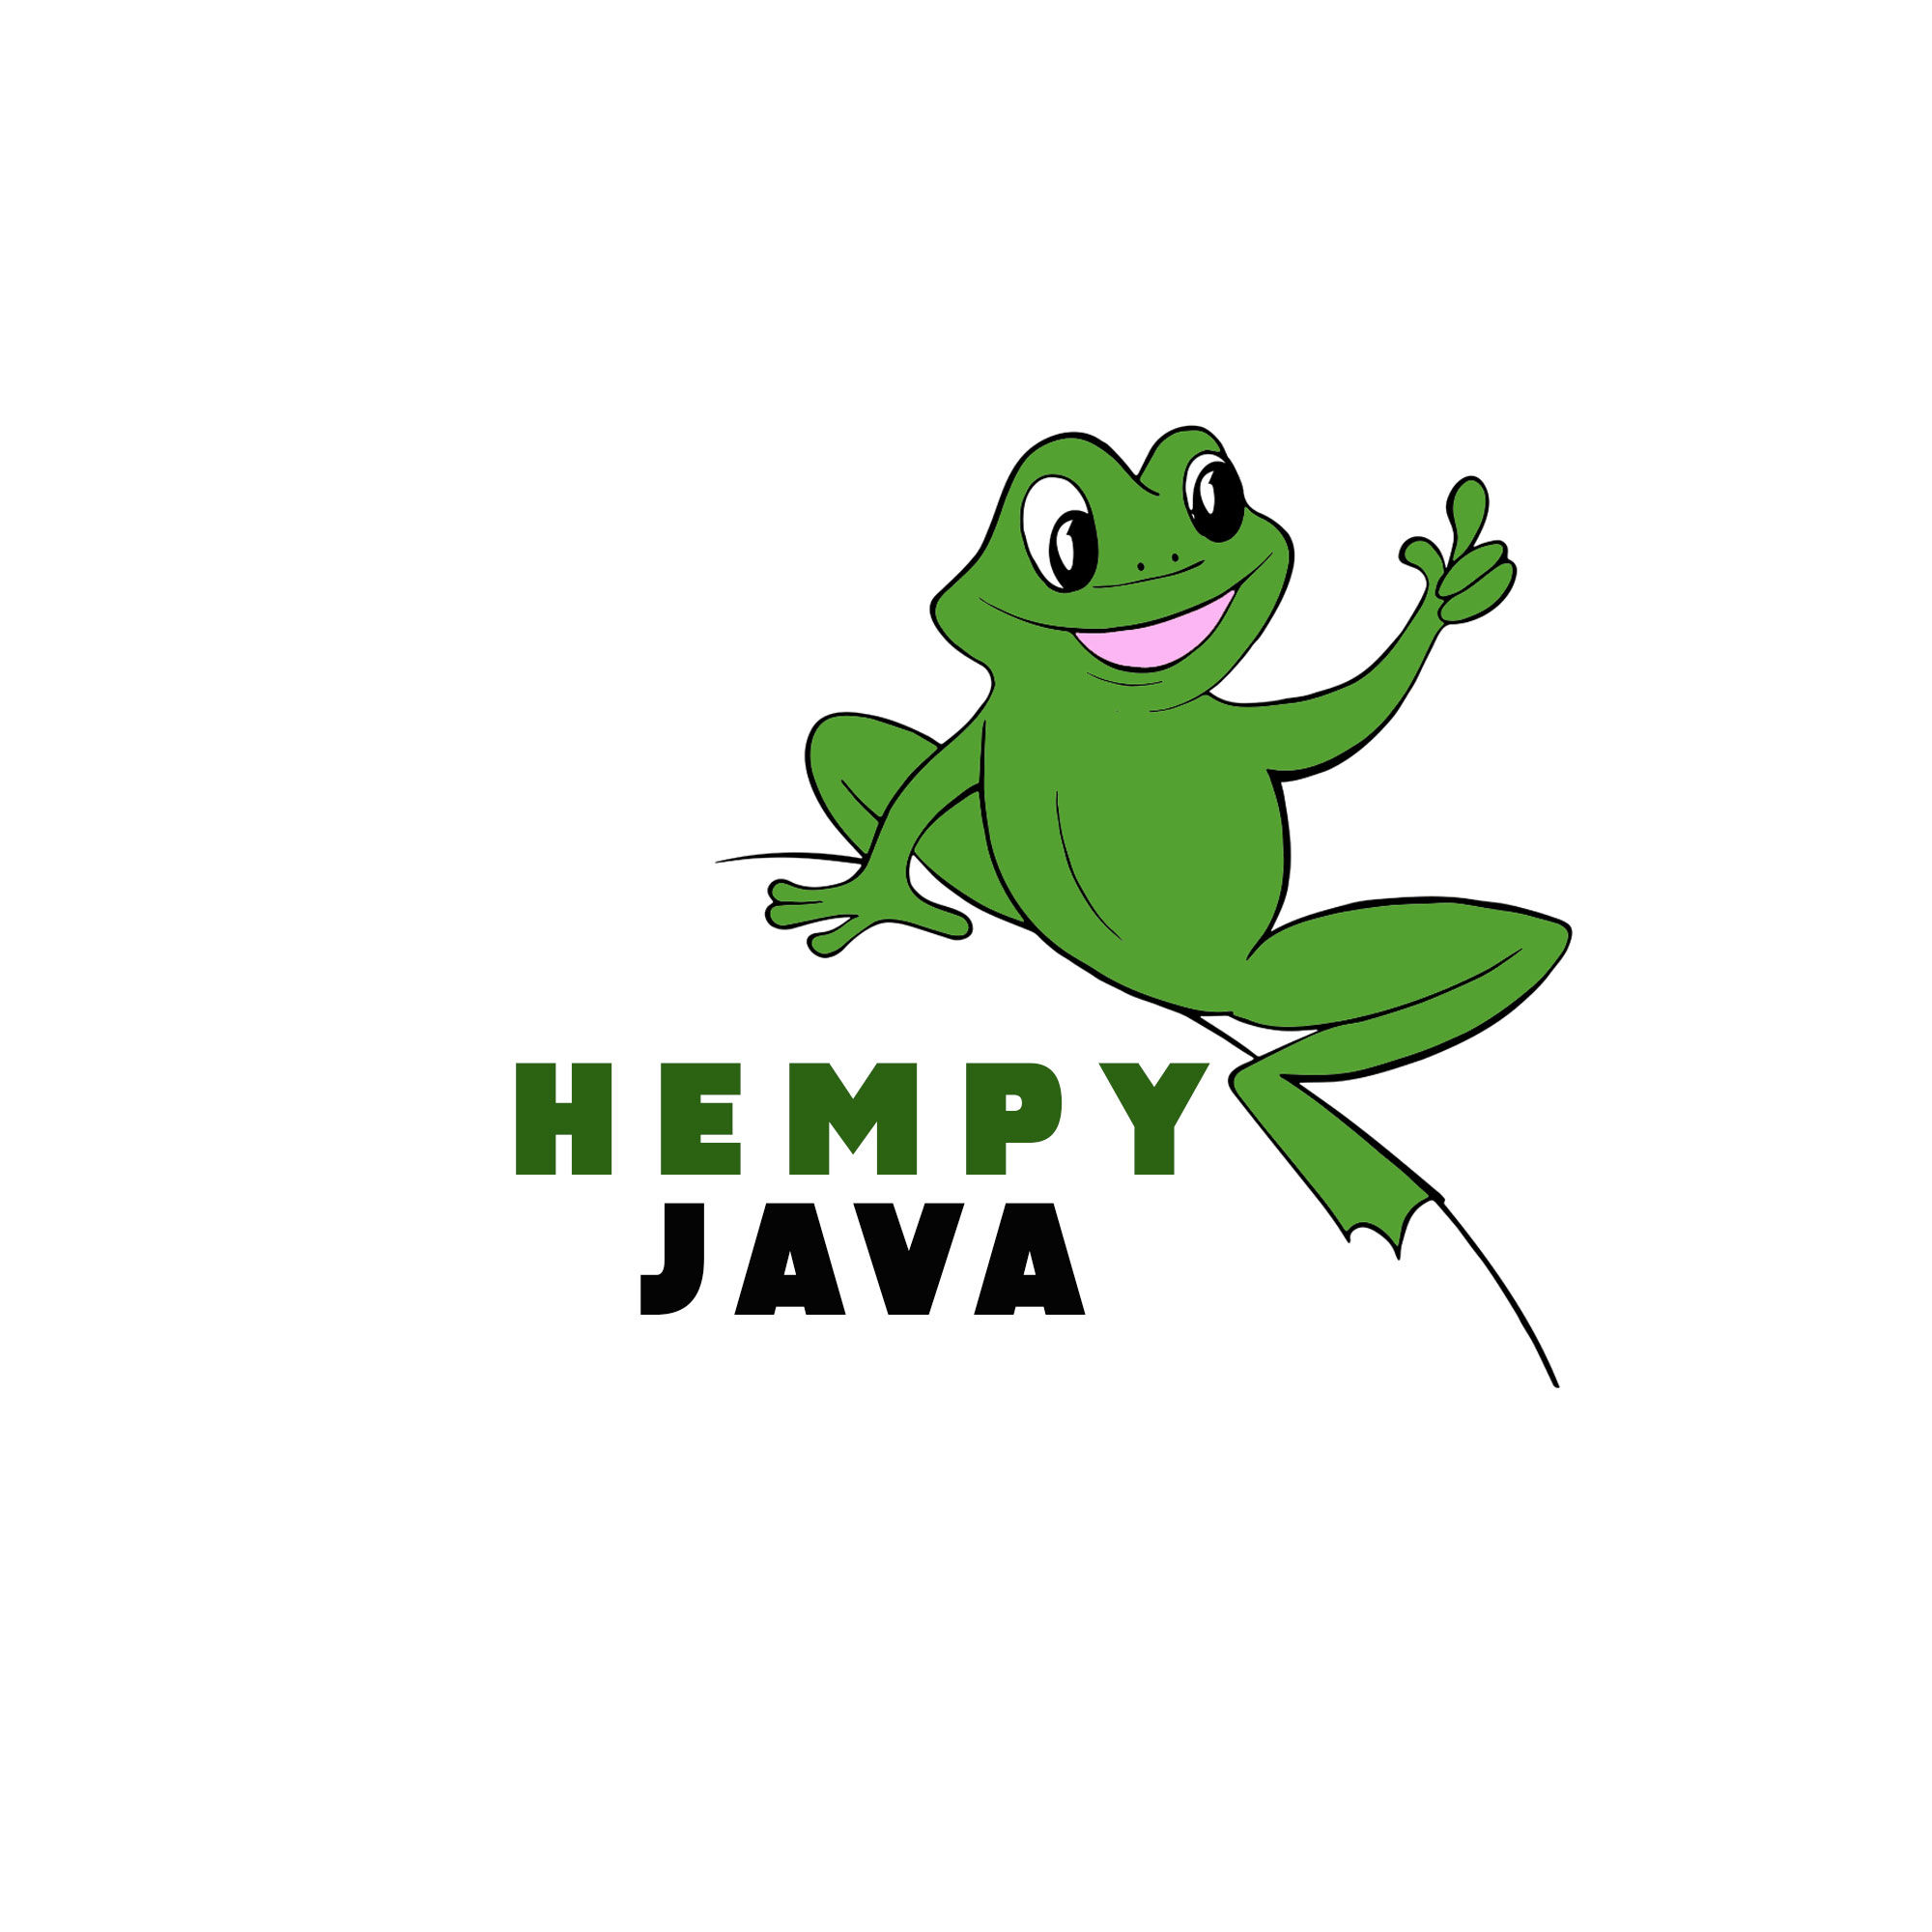 Hempy Java